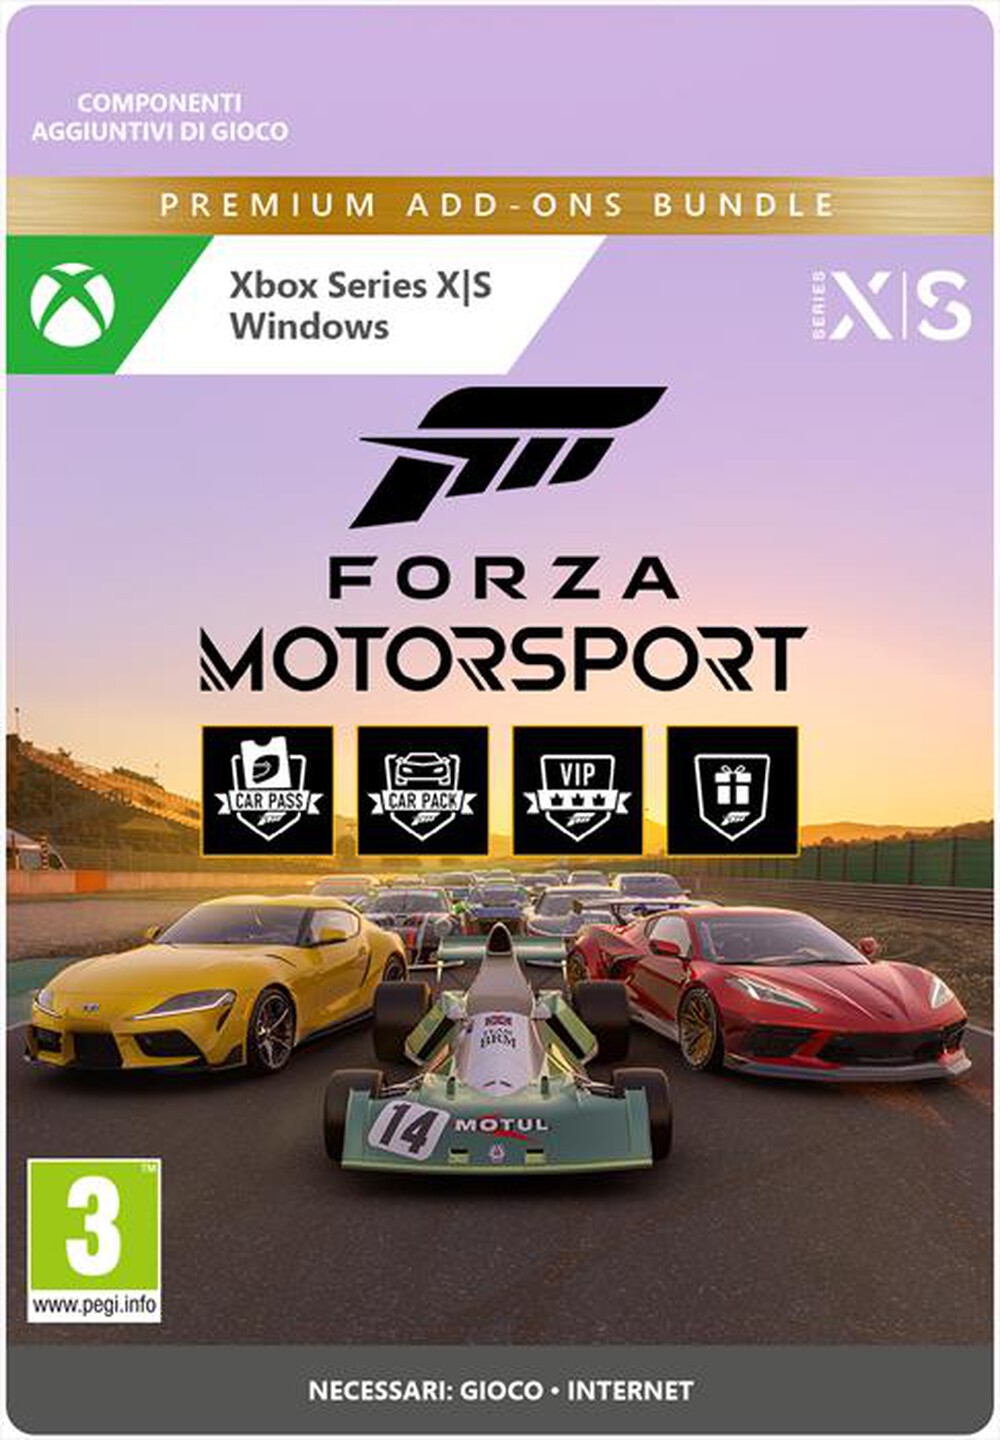 "MICROSOFT - Forza Motorsport Premium Add-Ons Bundle"